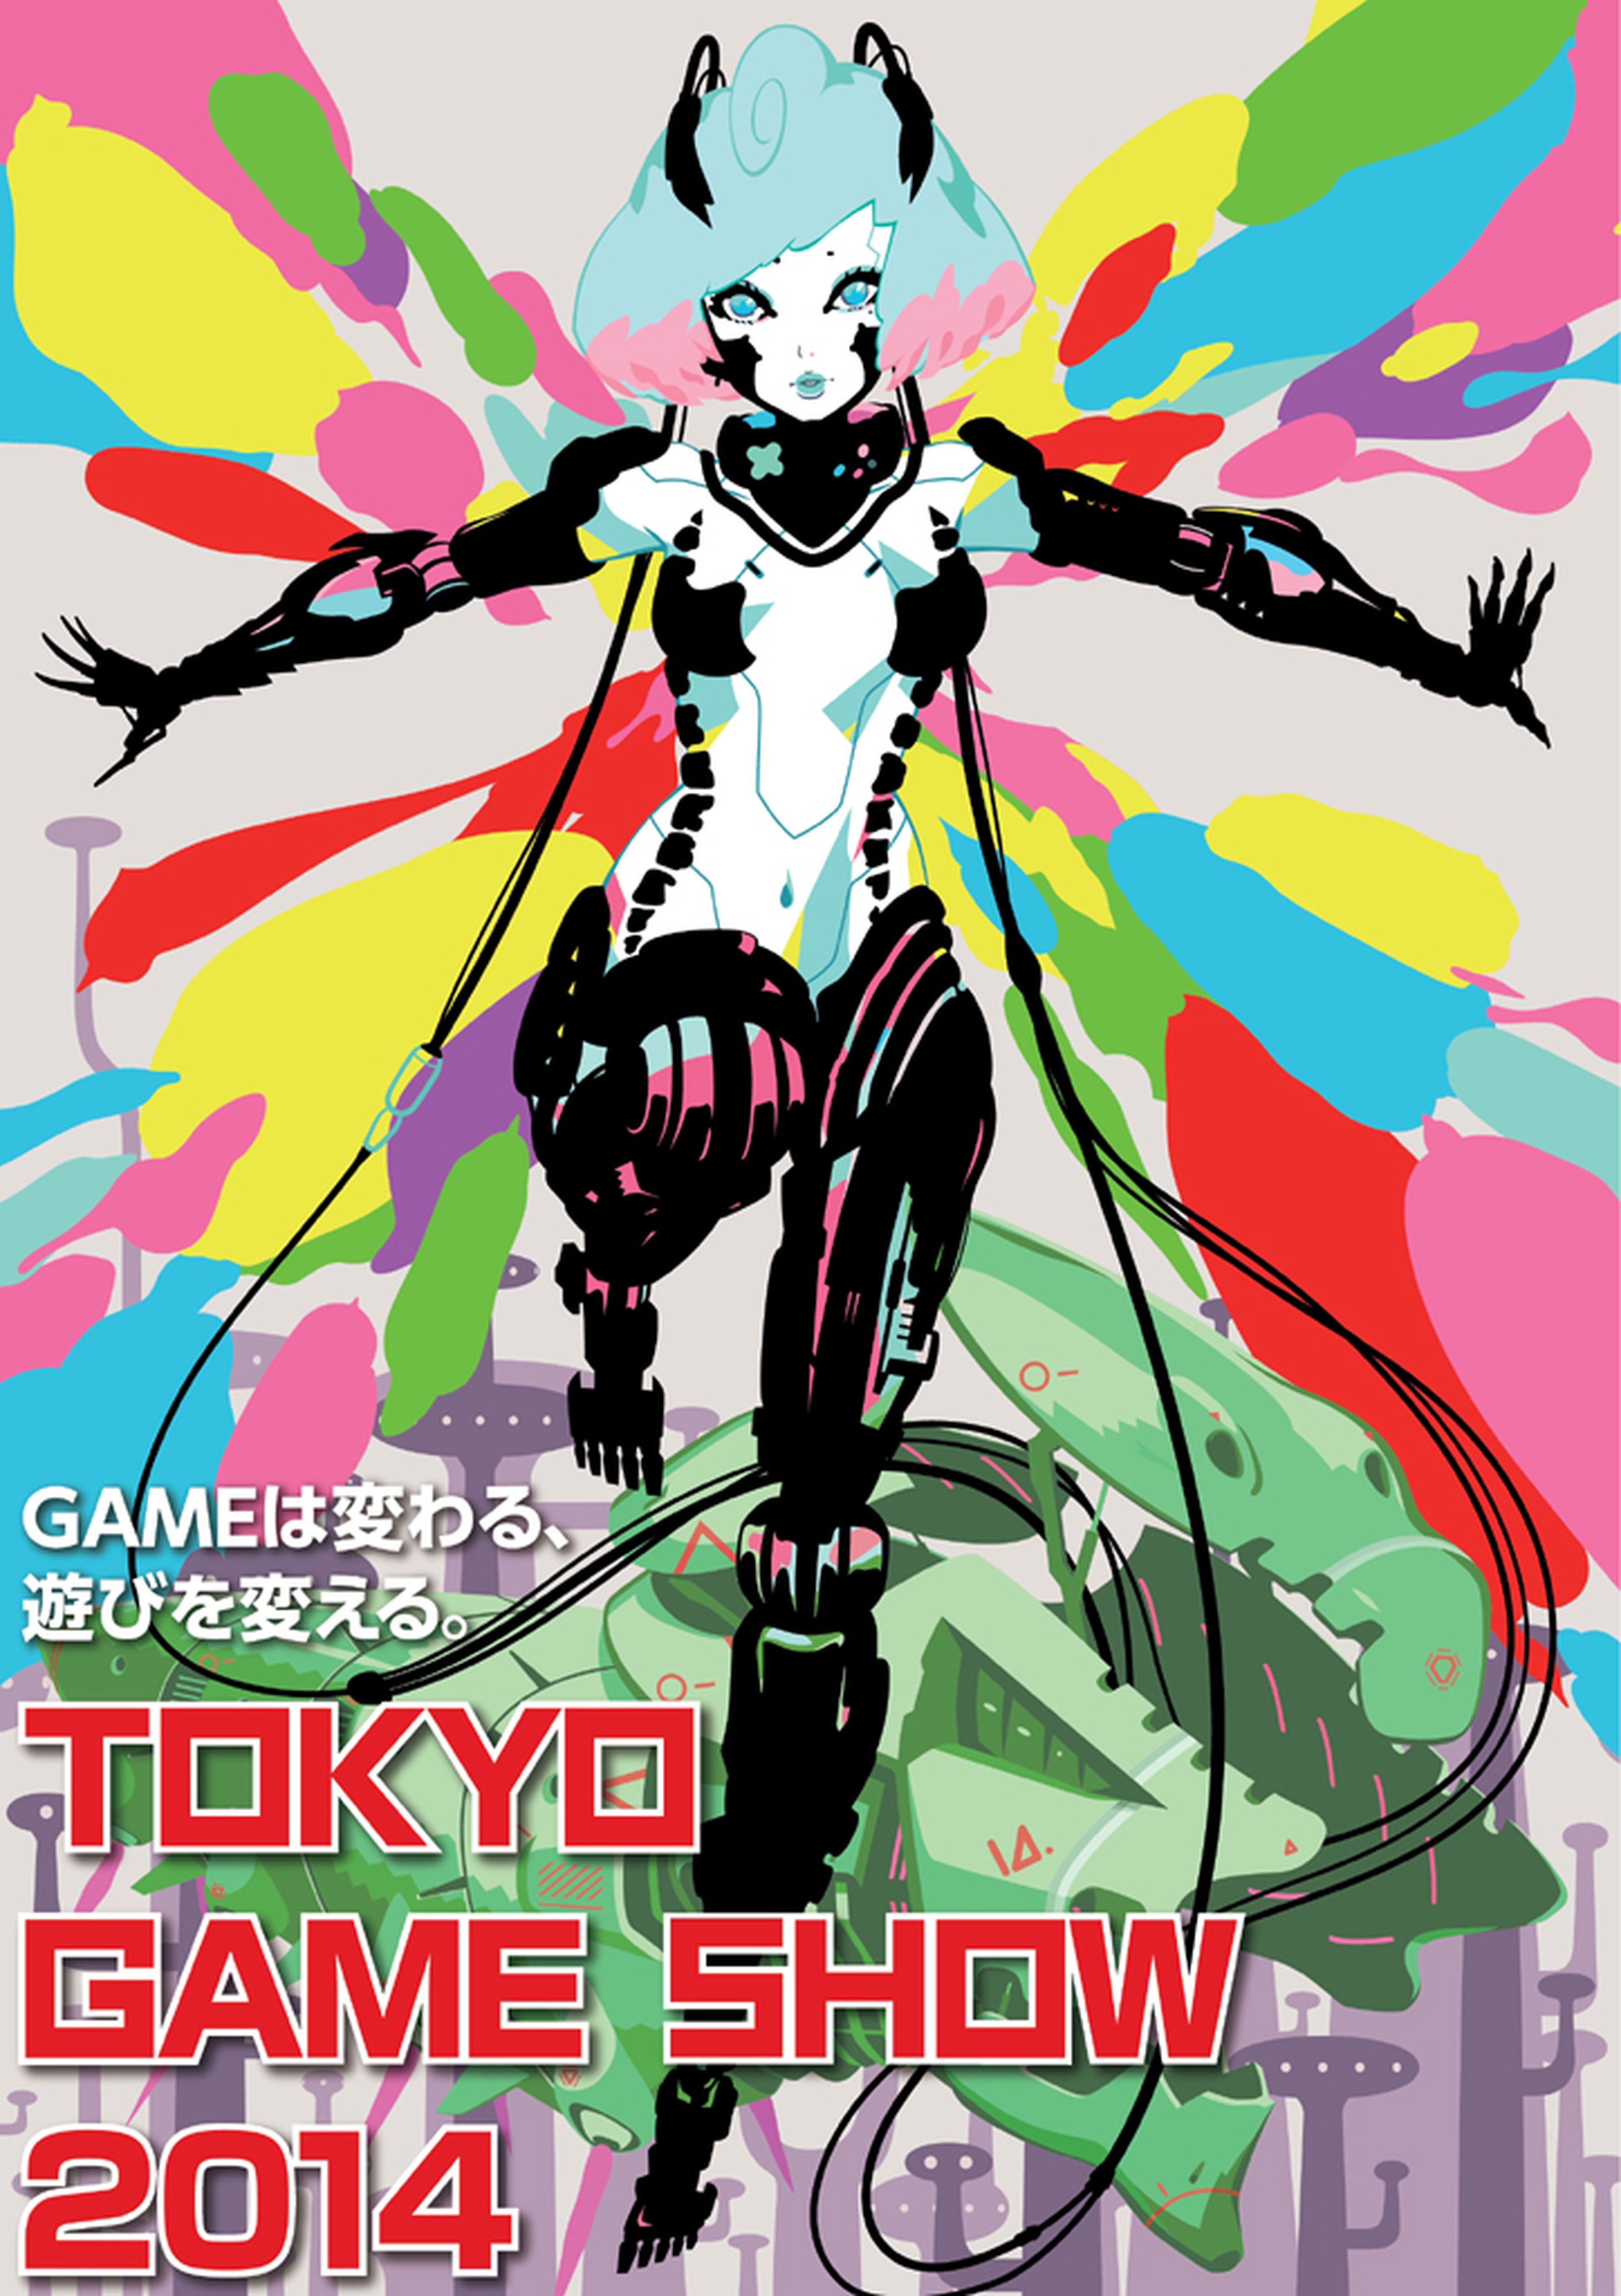 Tokyo Game Show 2014 muestra su cartel